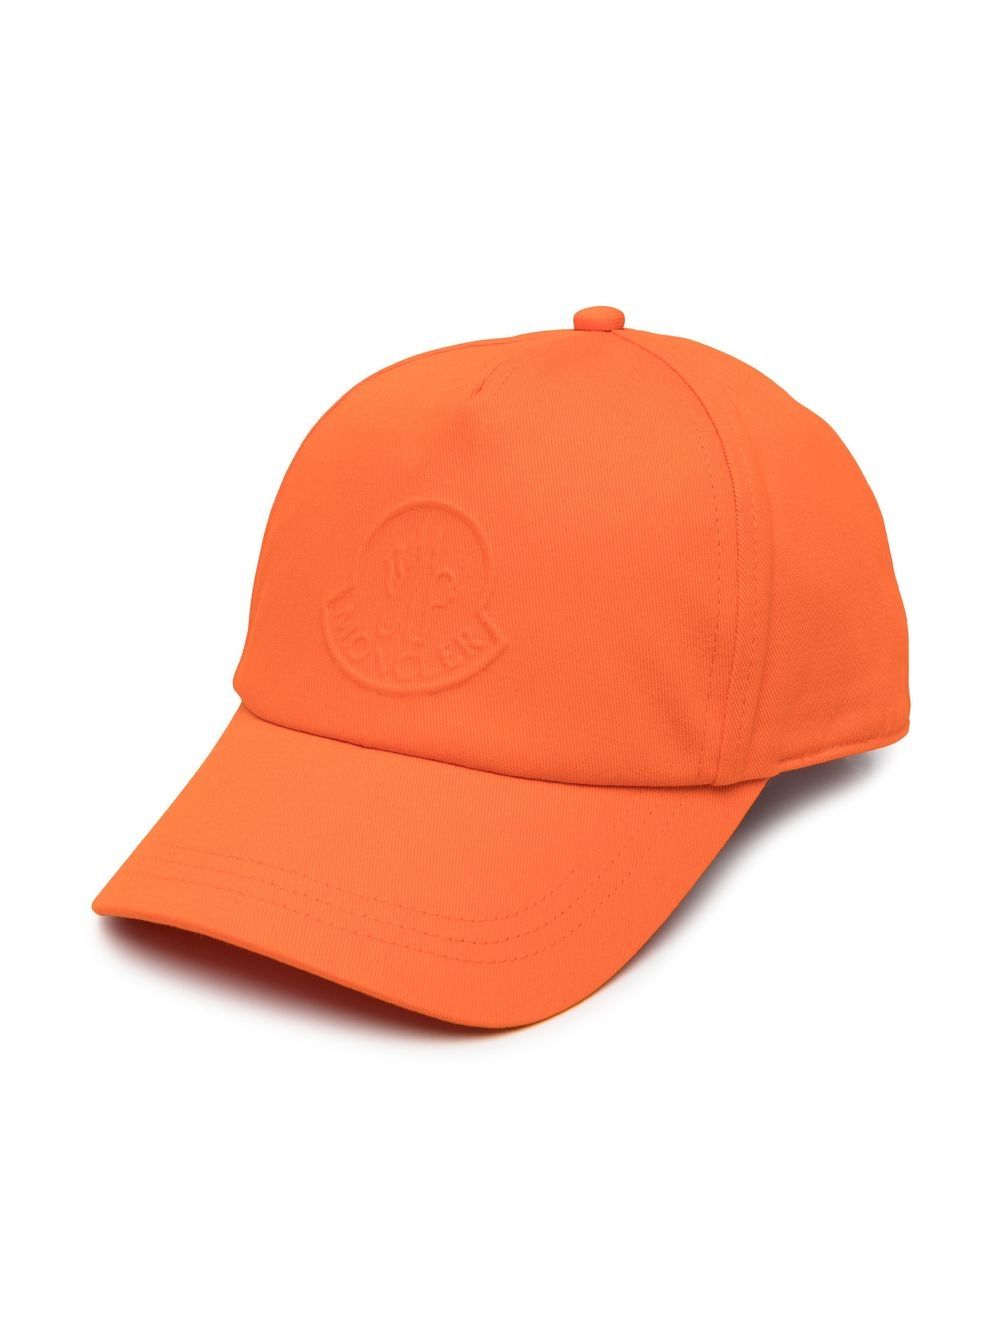 Bonnet orange unisexe